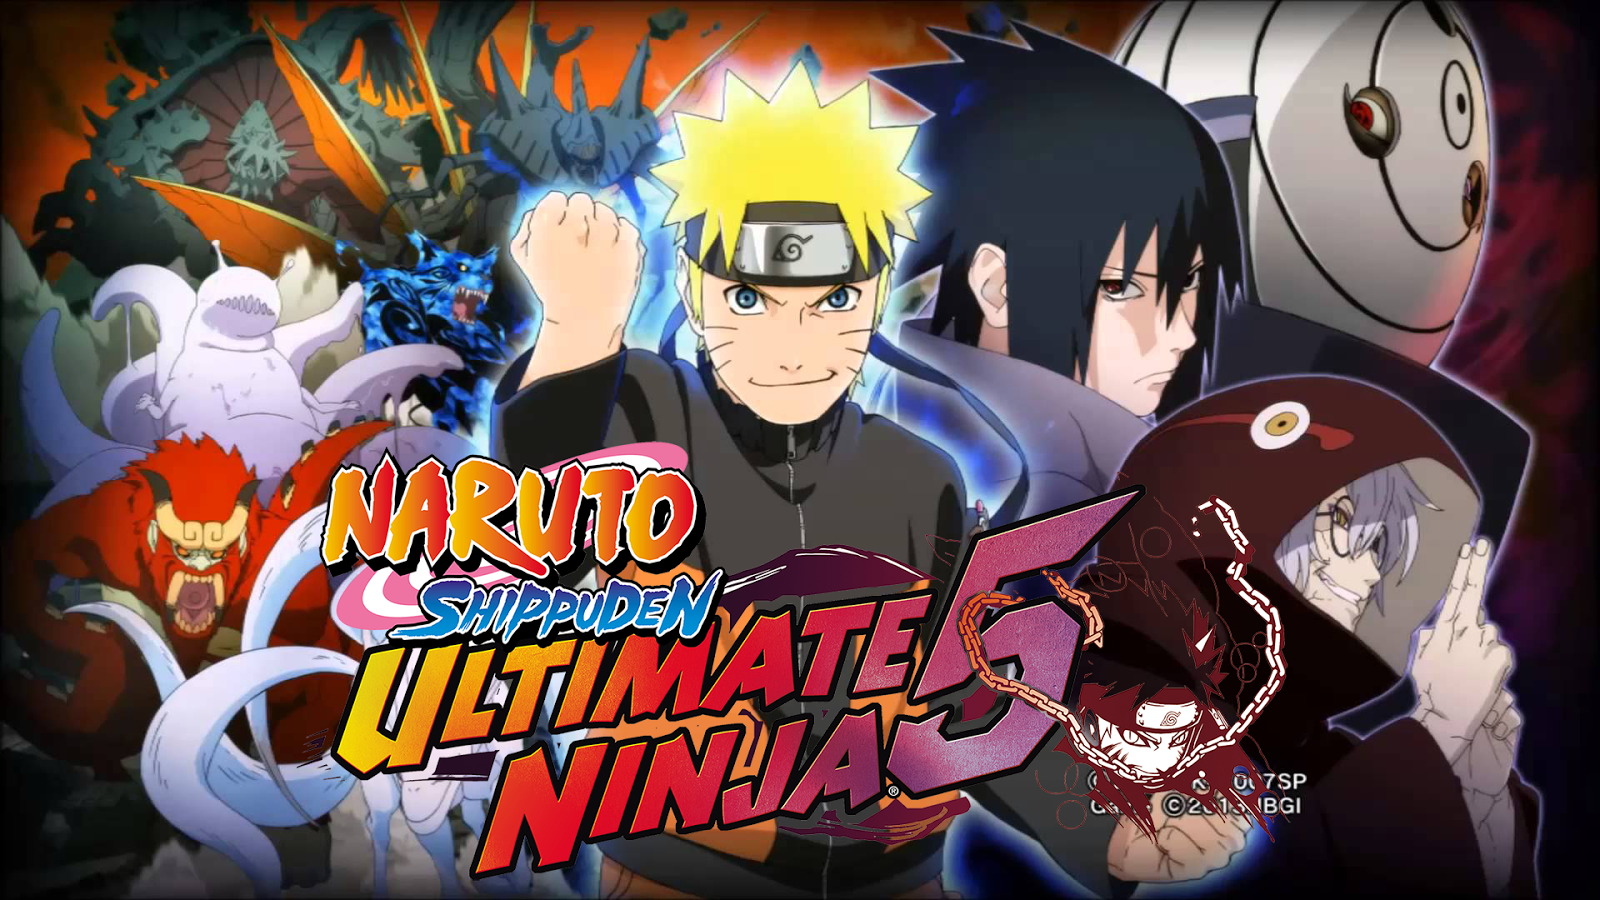 Download Game Psp Naruto Ninja 5 - westerngerman